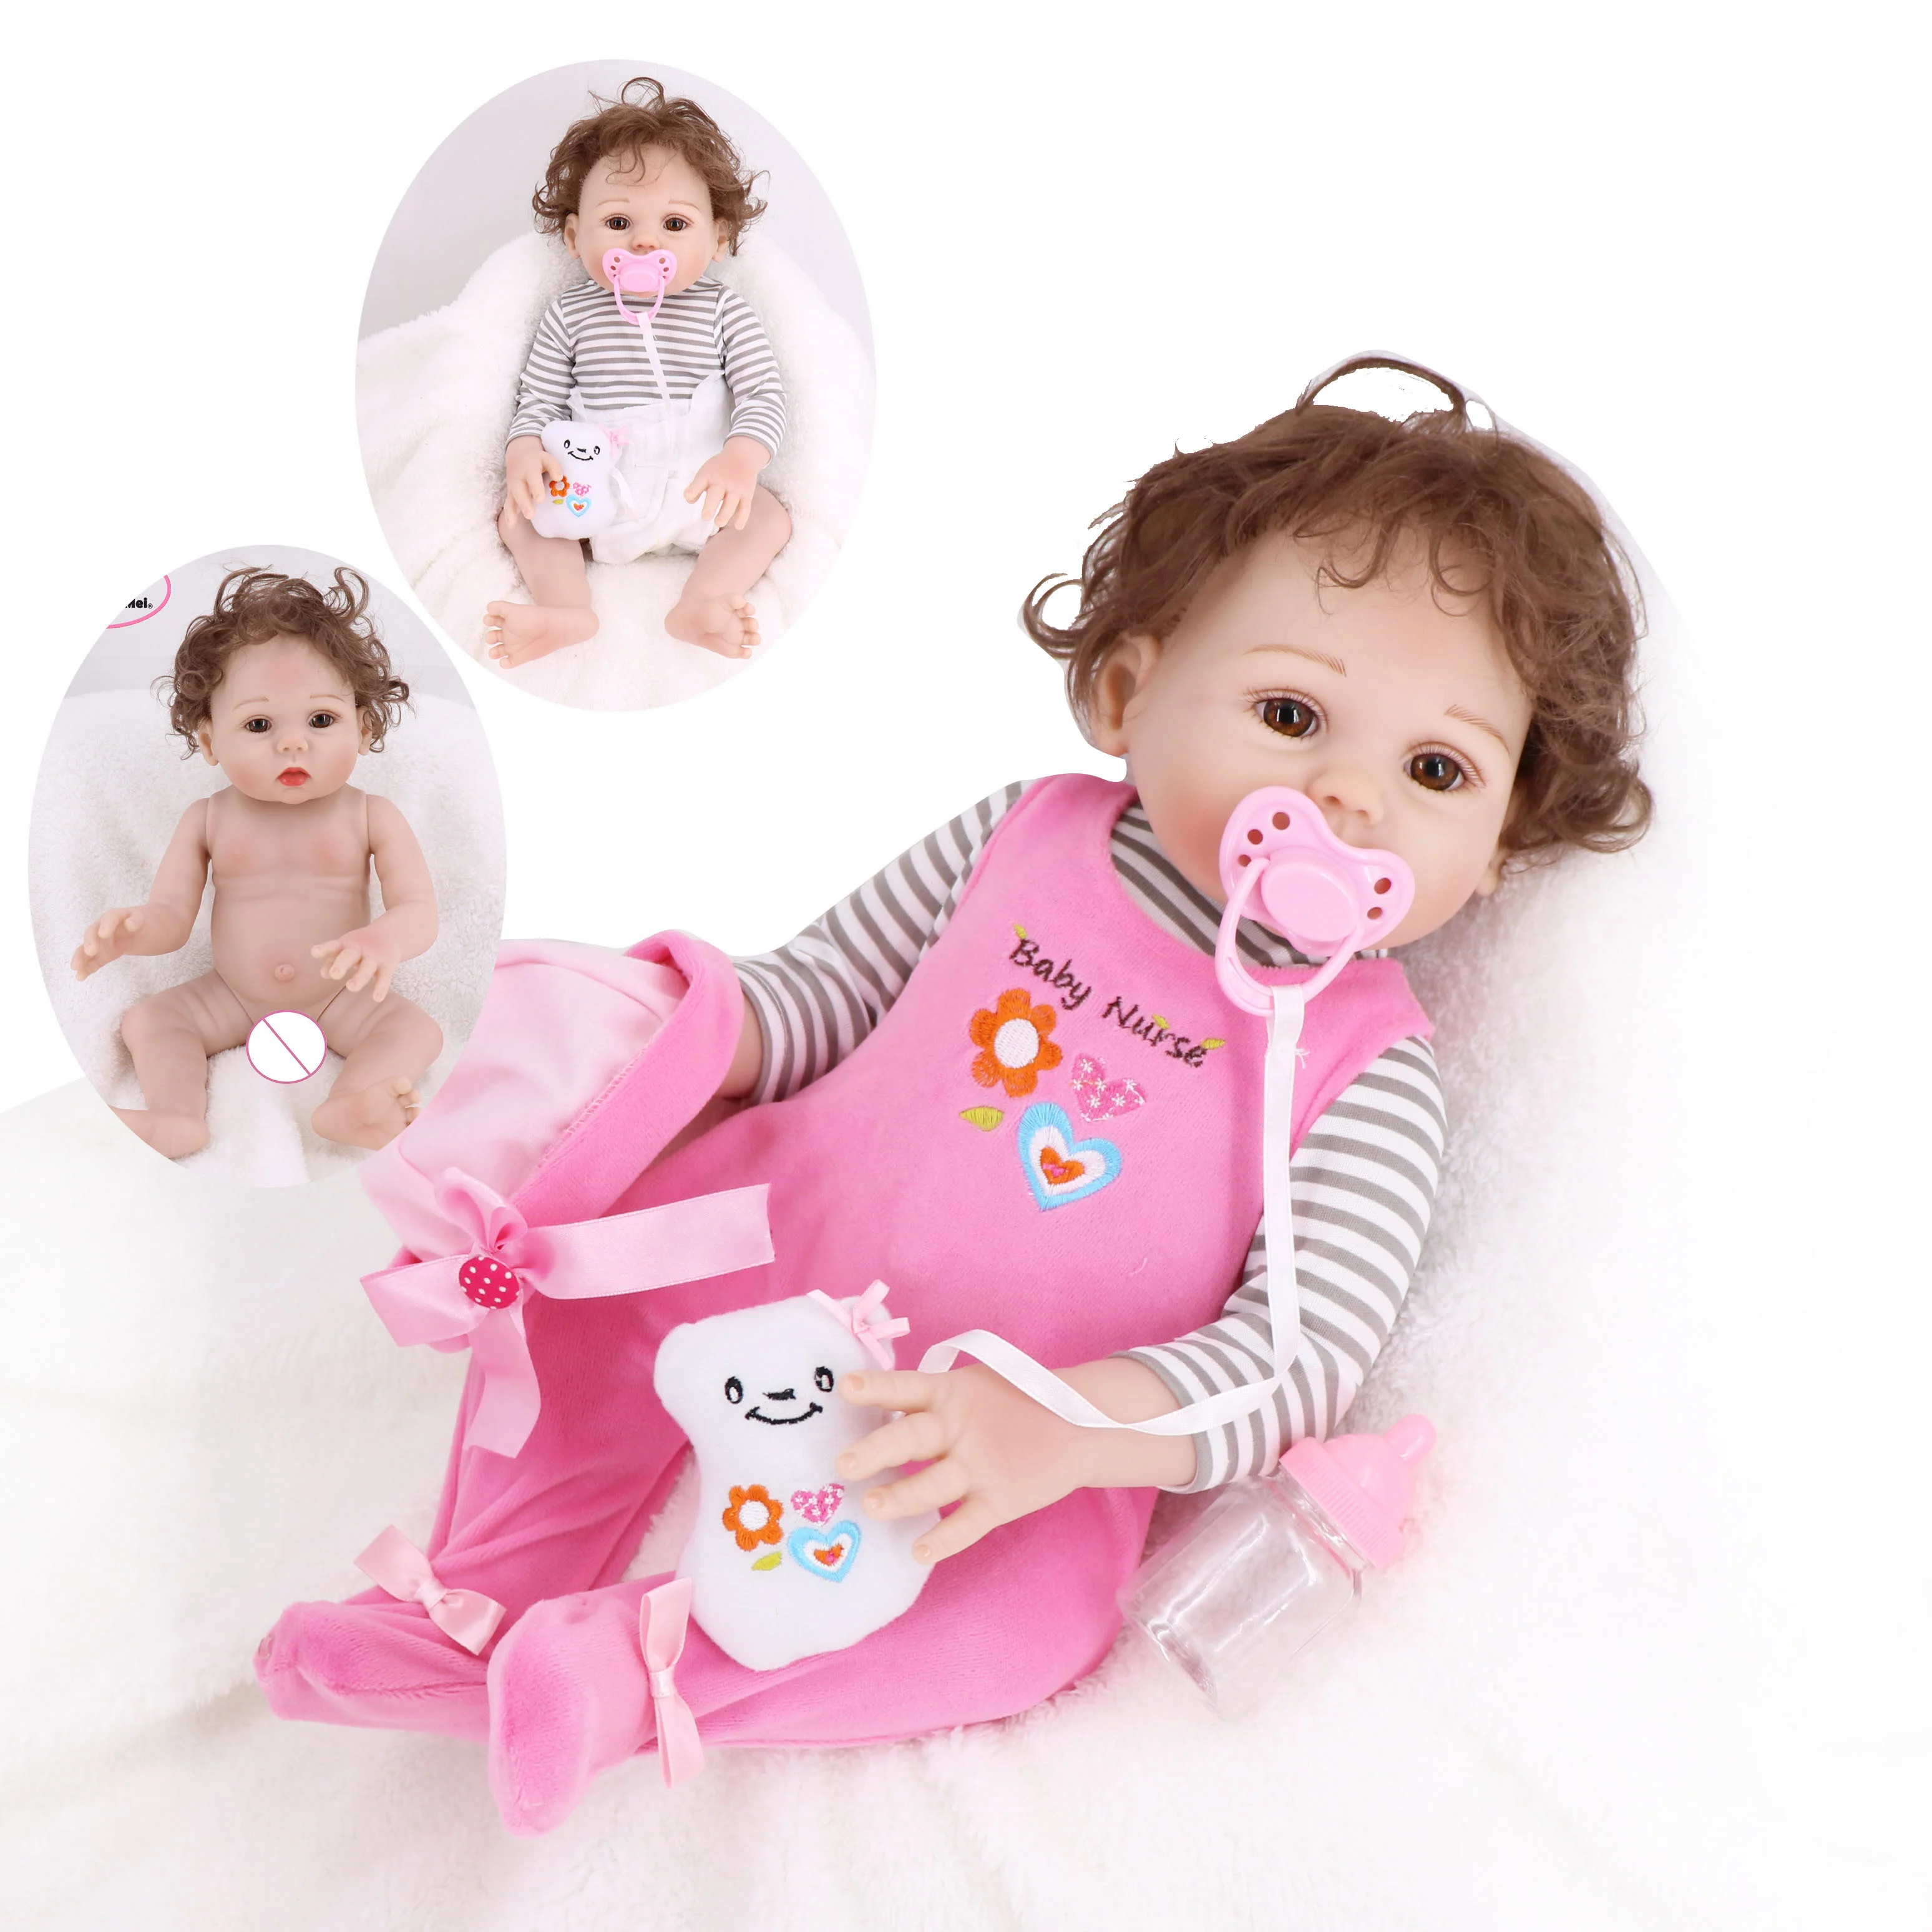 

19" 48cm bebe reborn corpo de silicone inteiro newborn baby girl alive dolls toys gift NPK DOLL